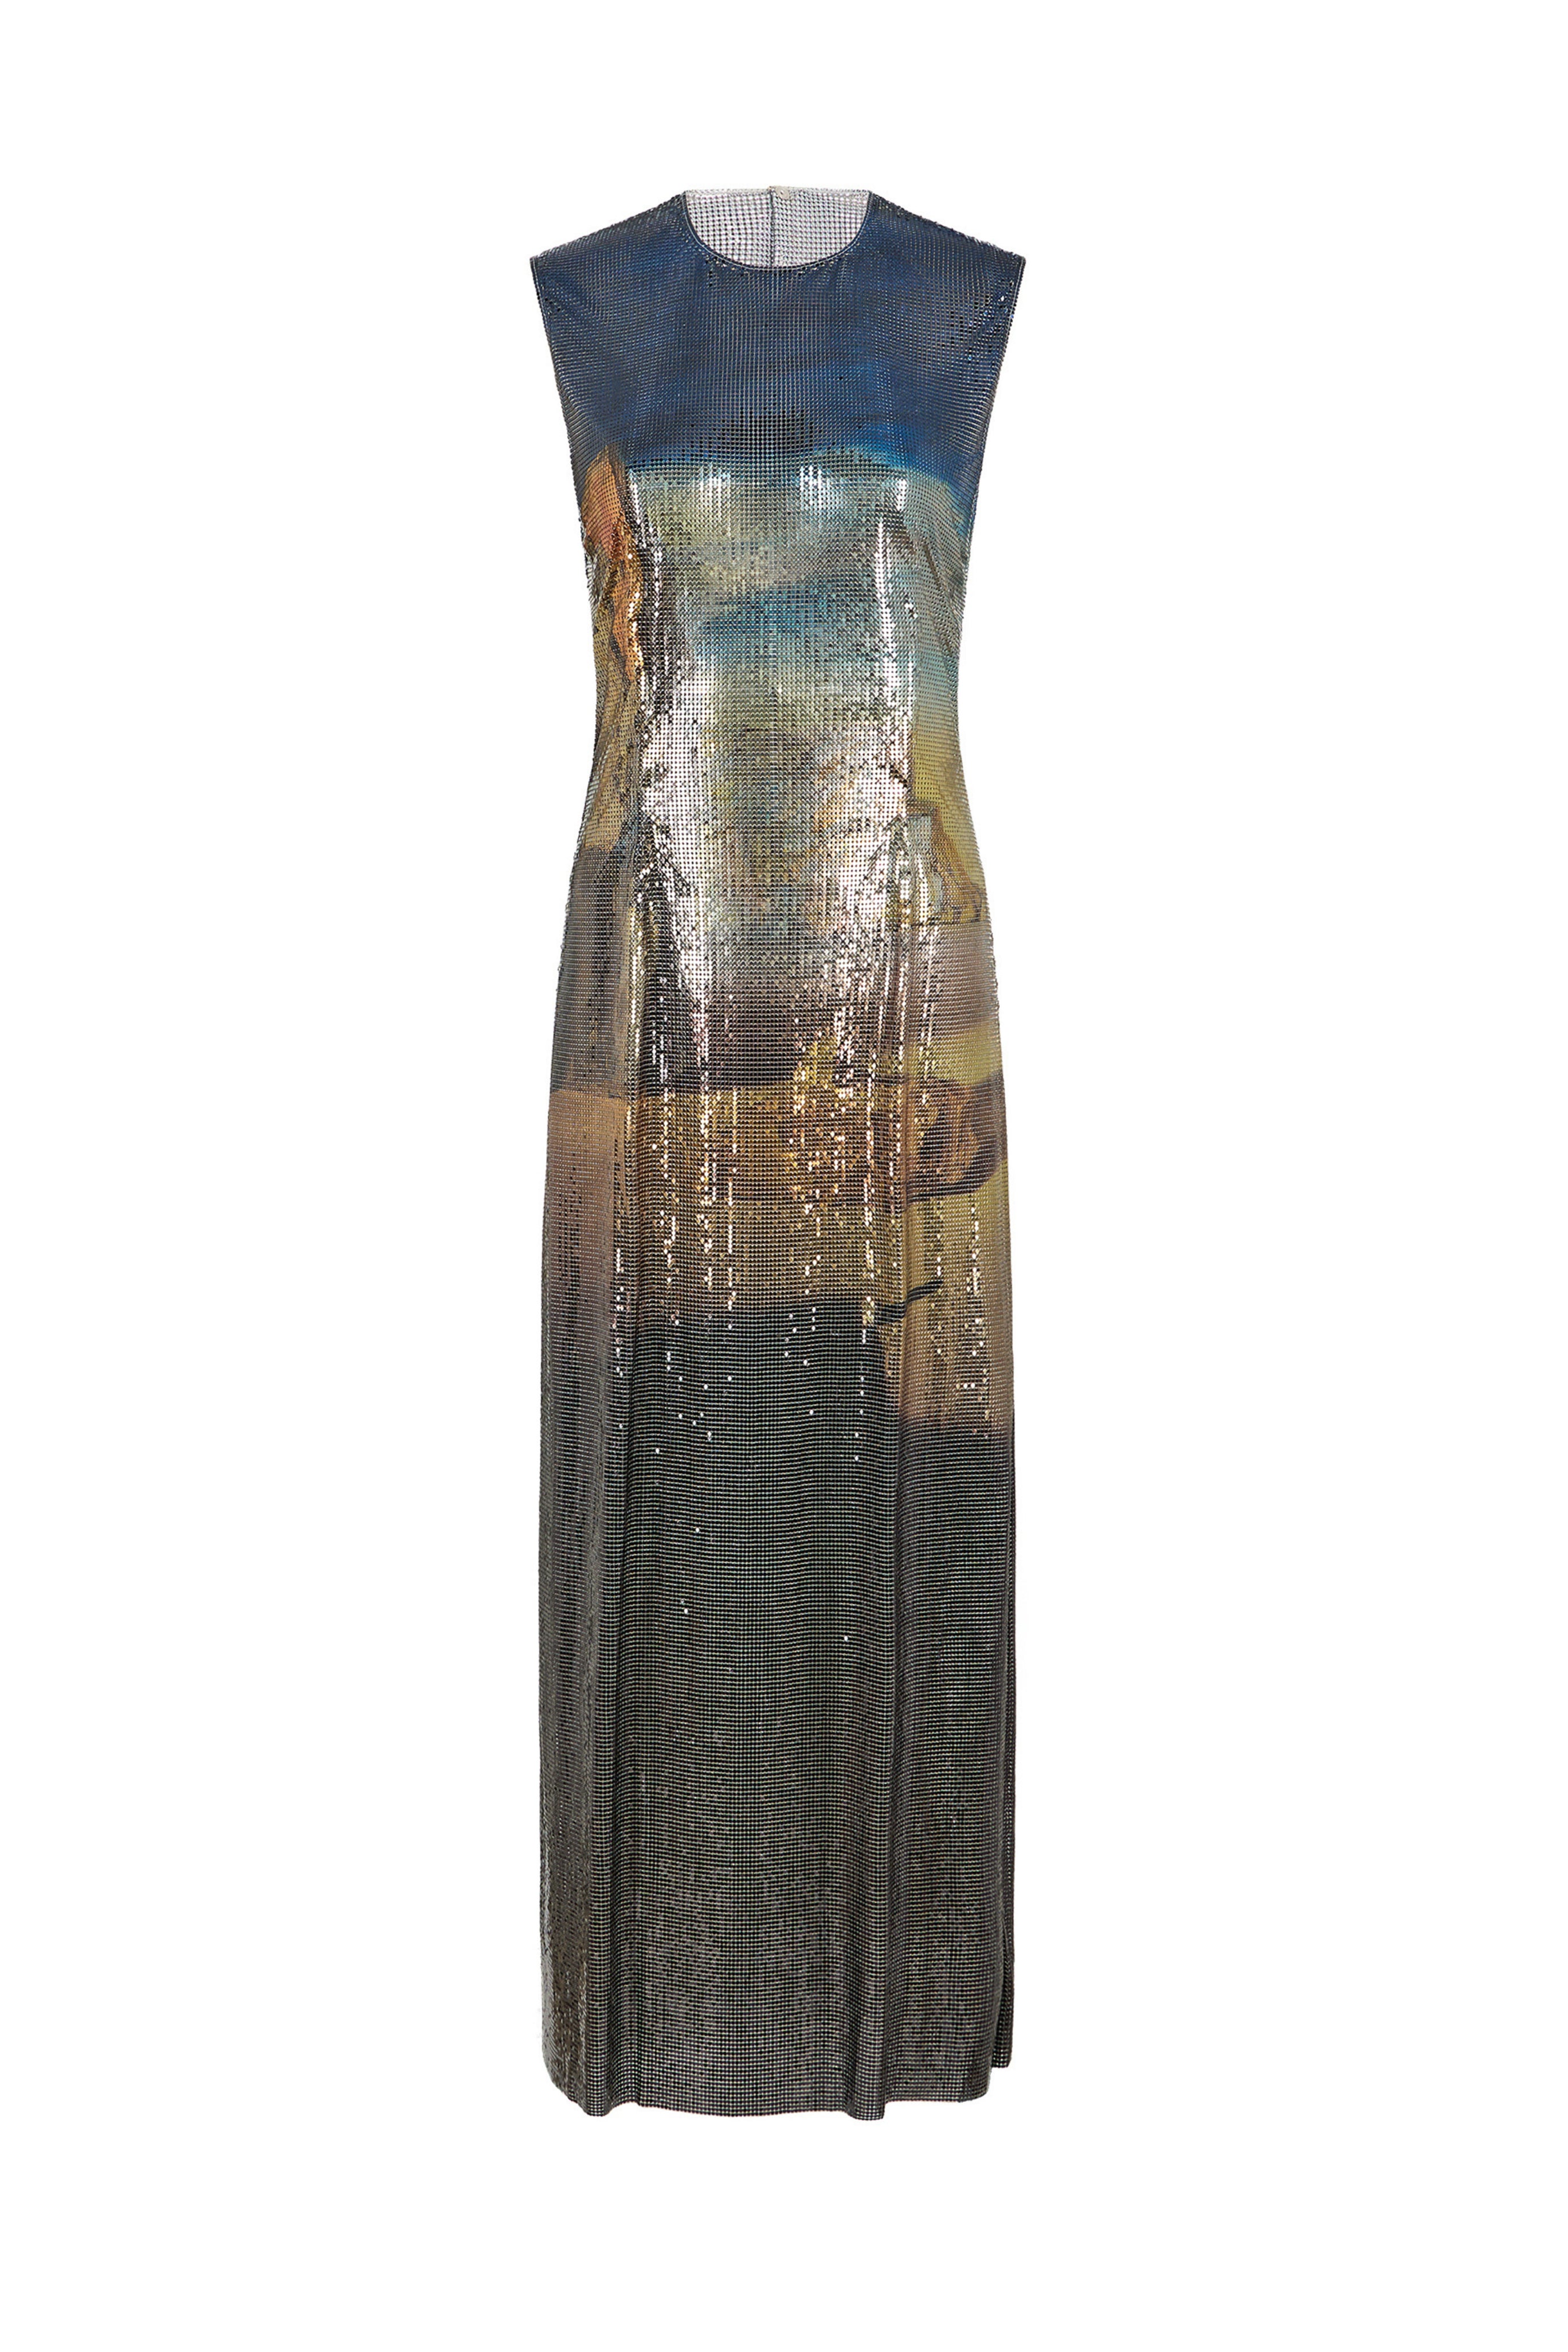 PACO RABANNE Aluminum Dress